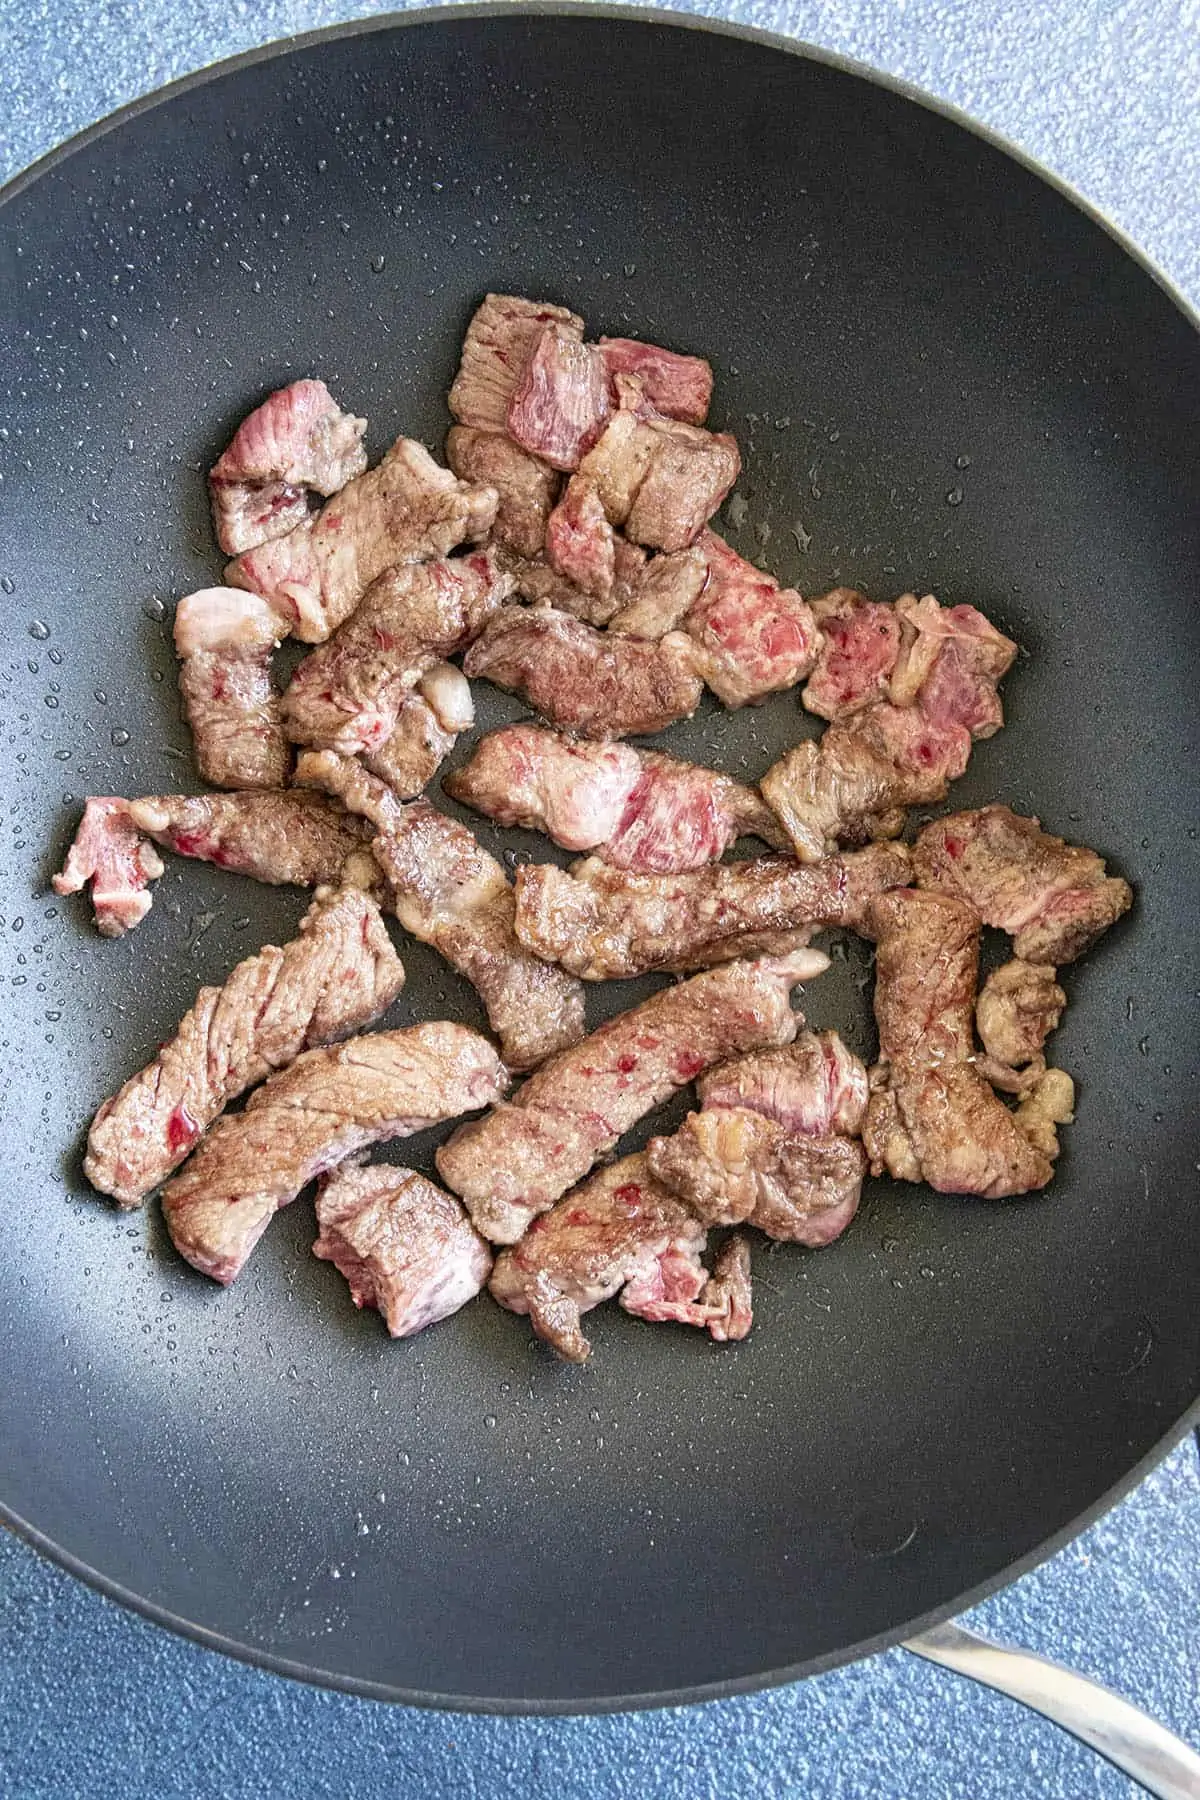 Searing strips of beef ribeye to make beef stir fry